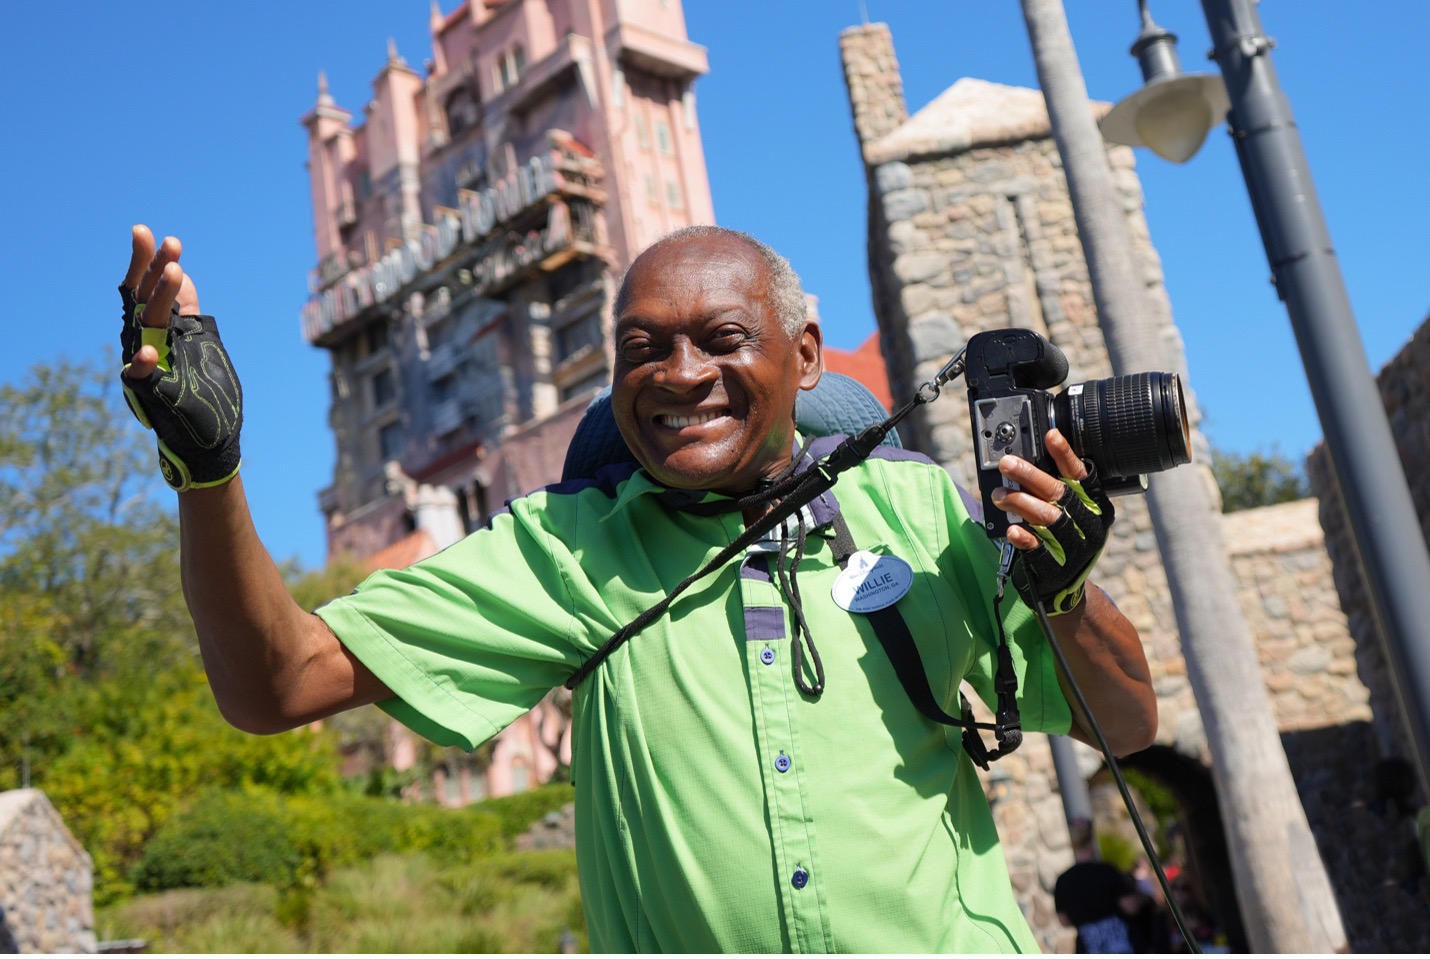 Disney PhotoPass cast member holding a camera at Disney's Hollywood Studios